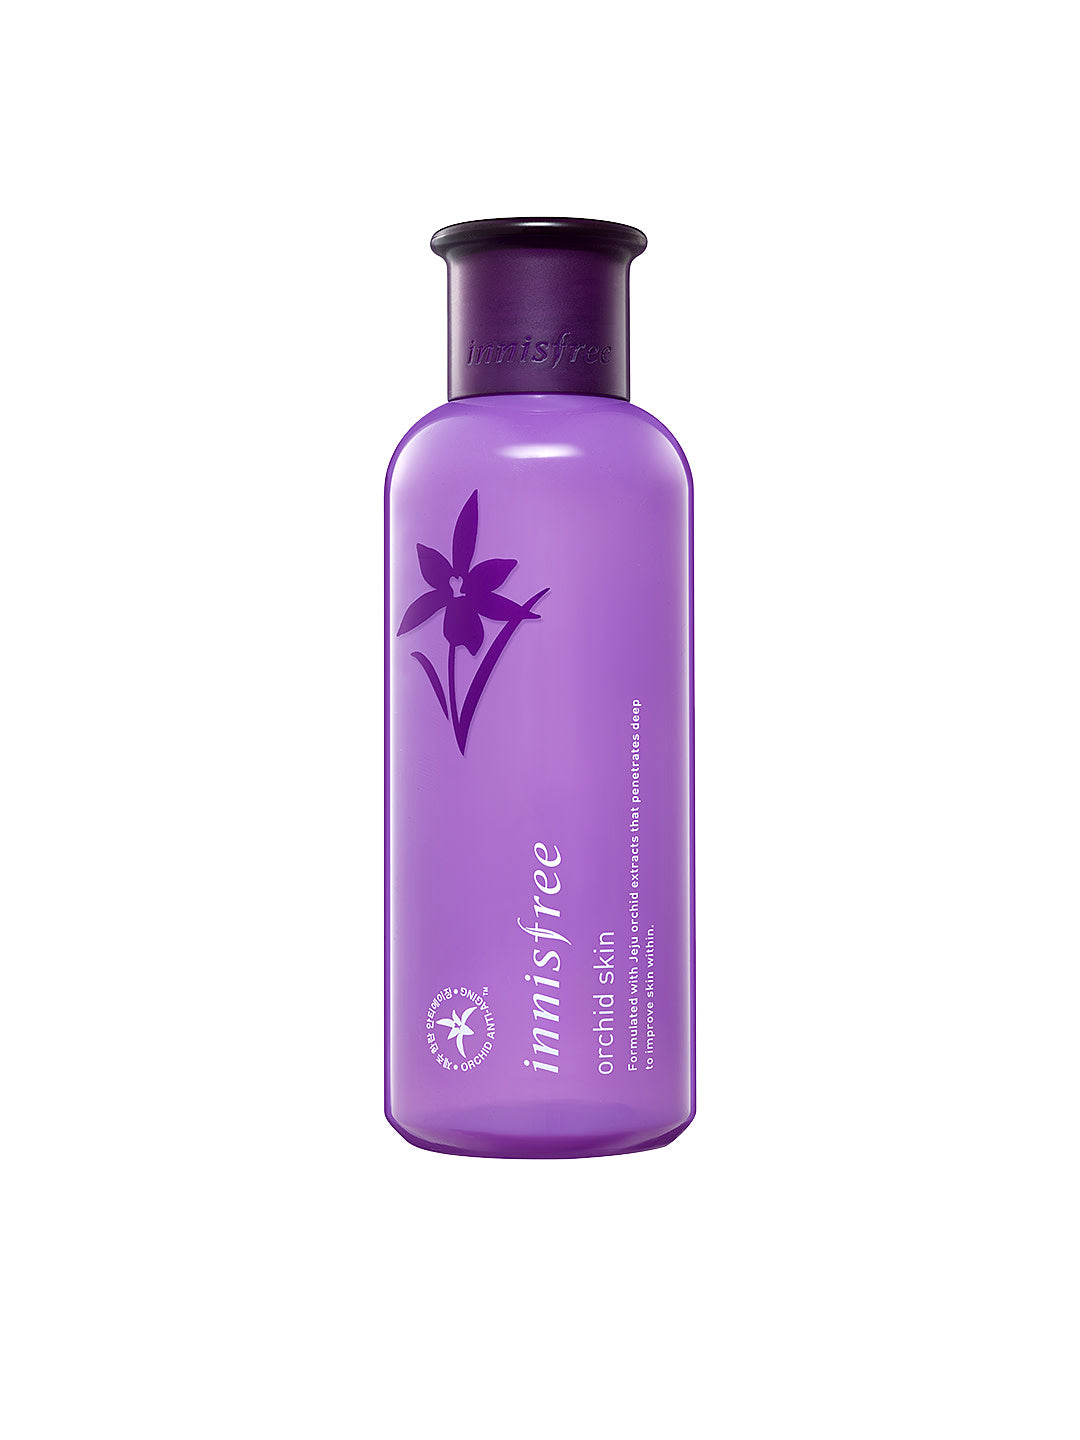 INNISFREE orchid skin 200ml - Misumi Cosmetics Nepal